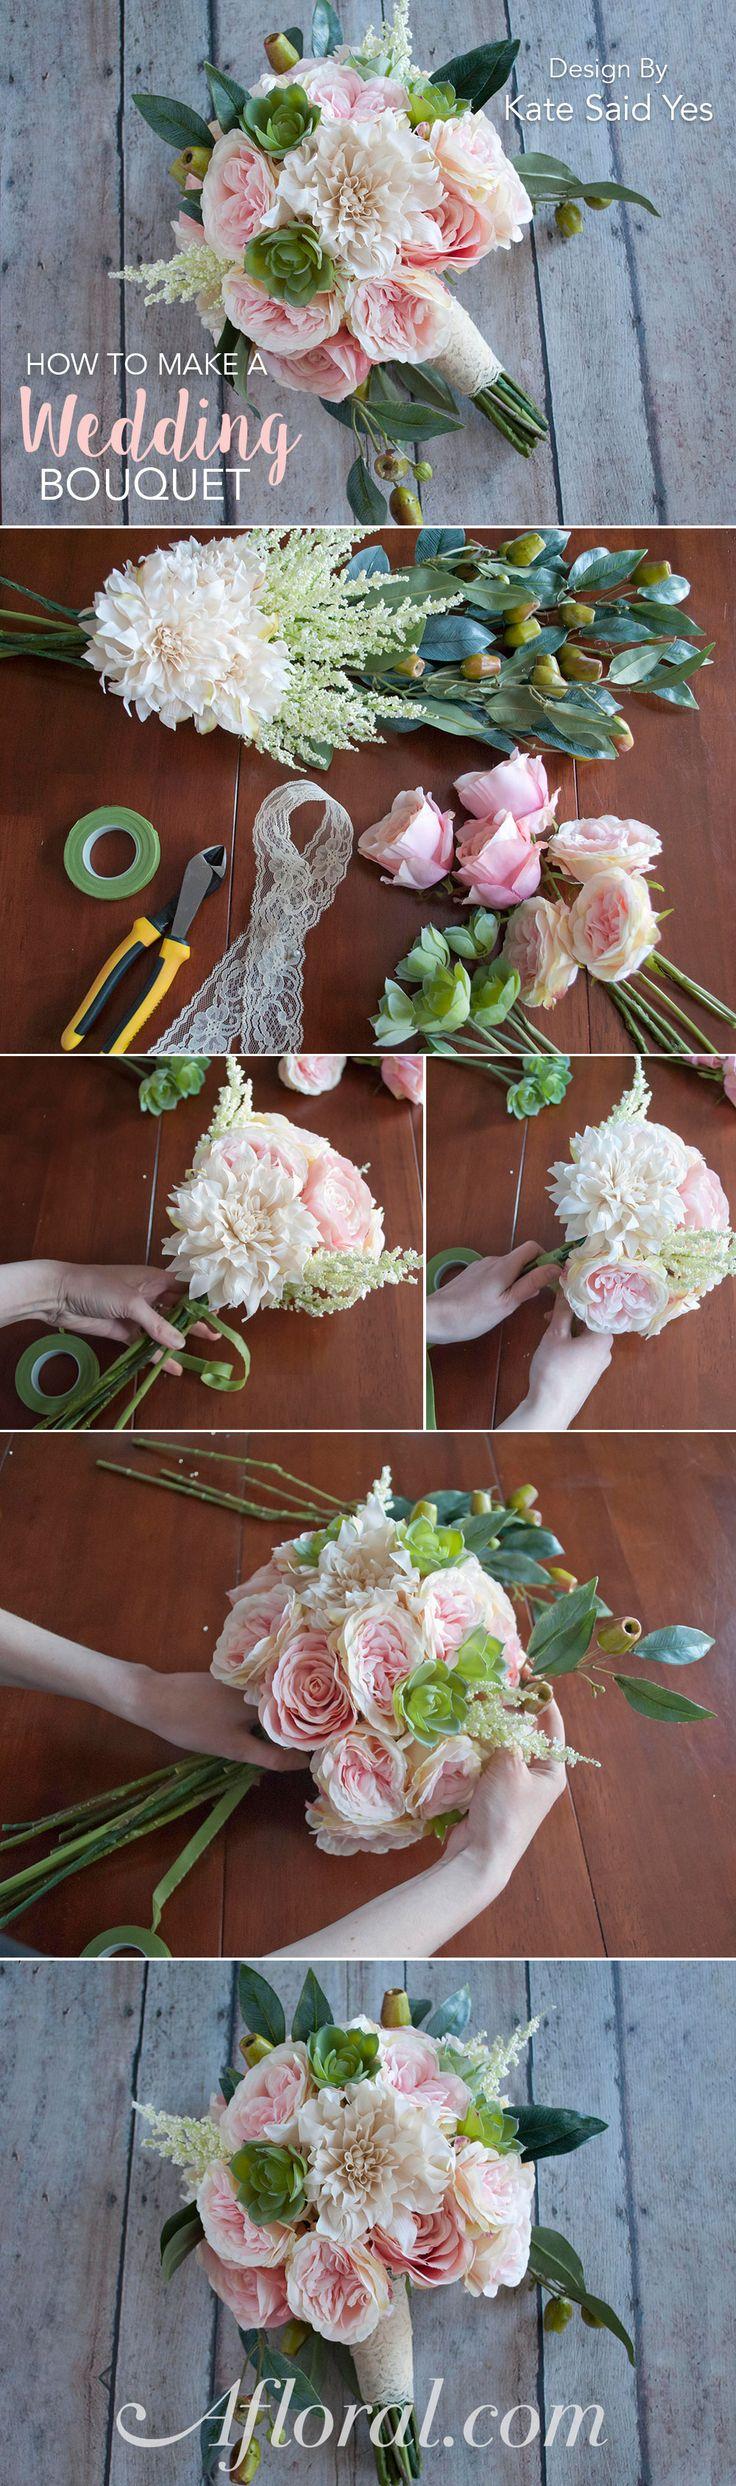 Wedding - How To Make A Wedding Bouquet